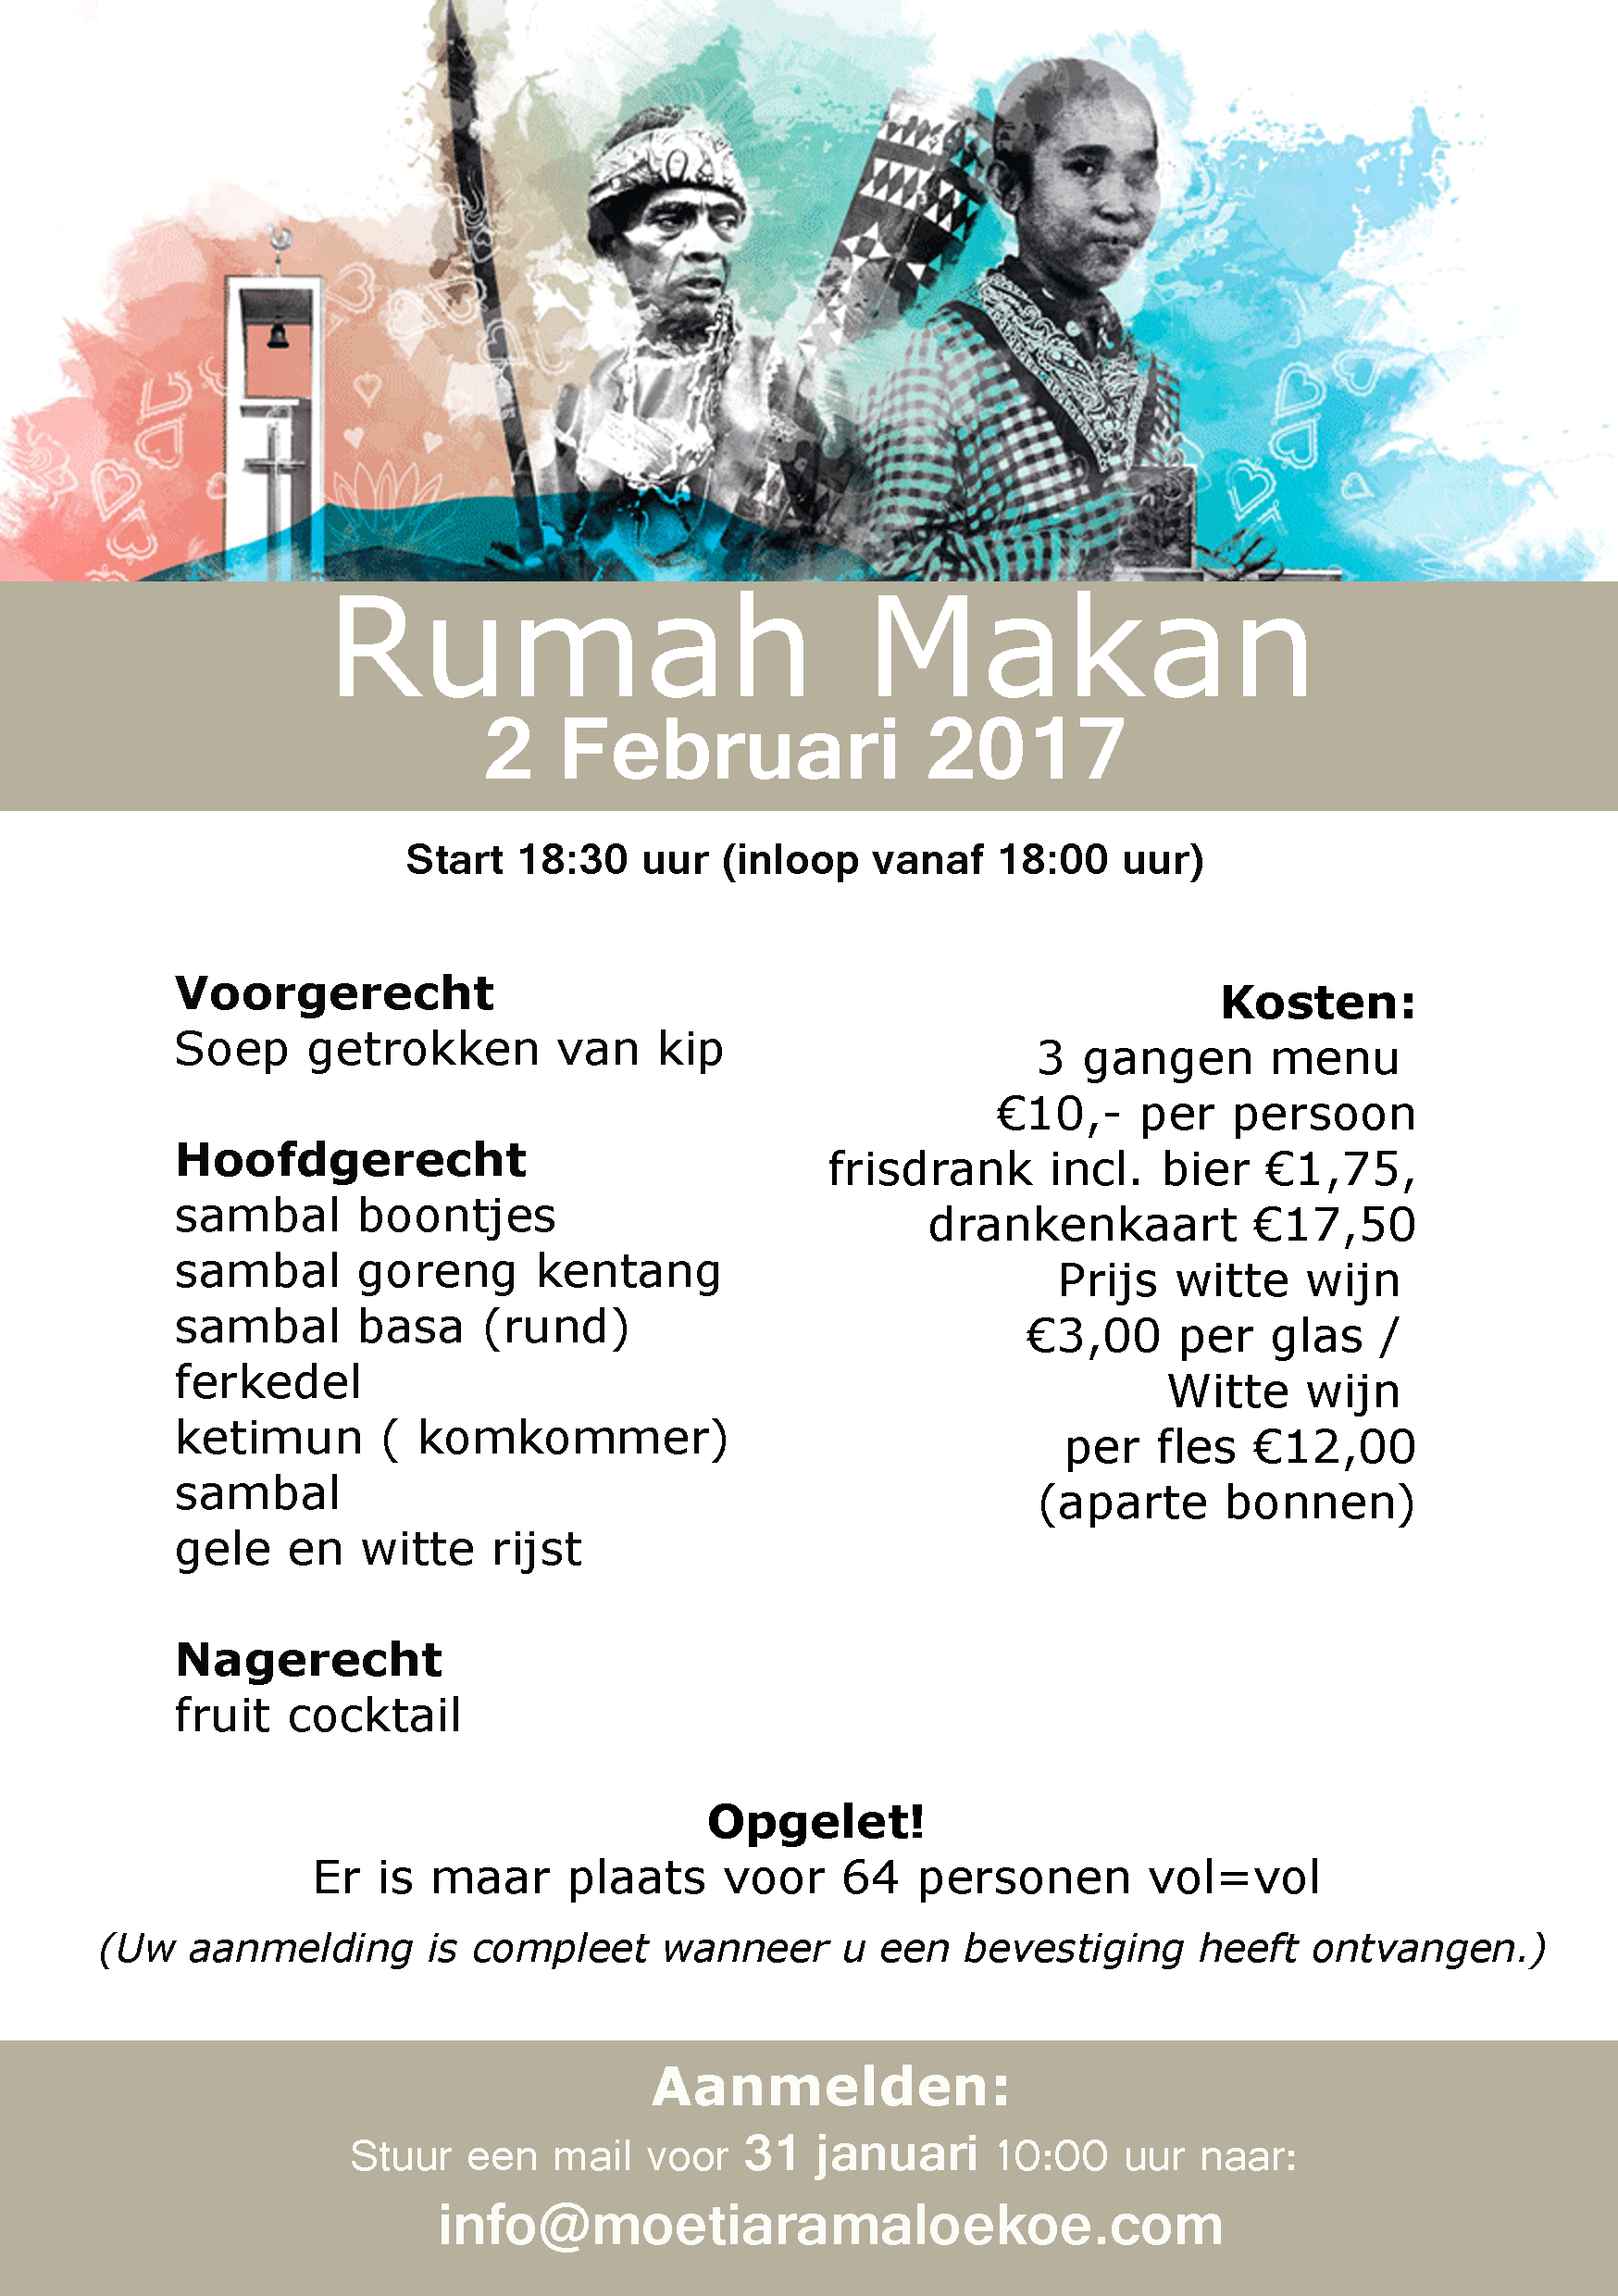 Rumah Makan tegenwoordig €10,- pp